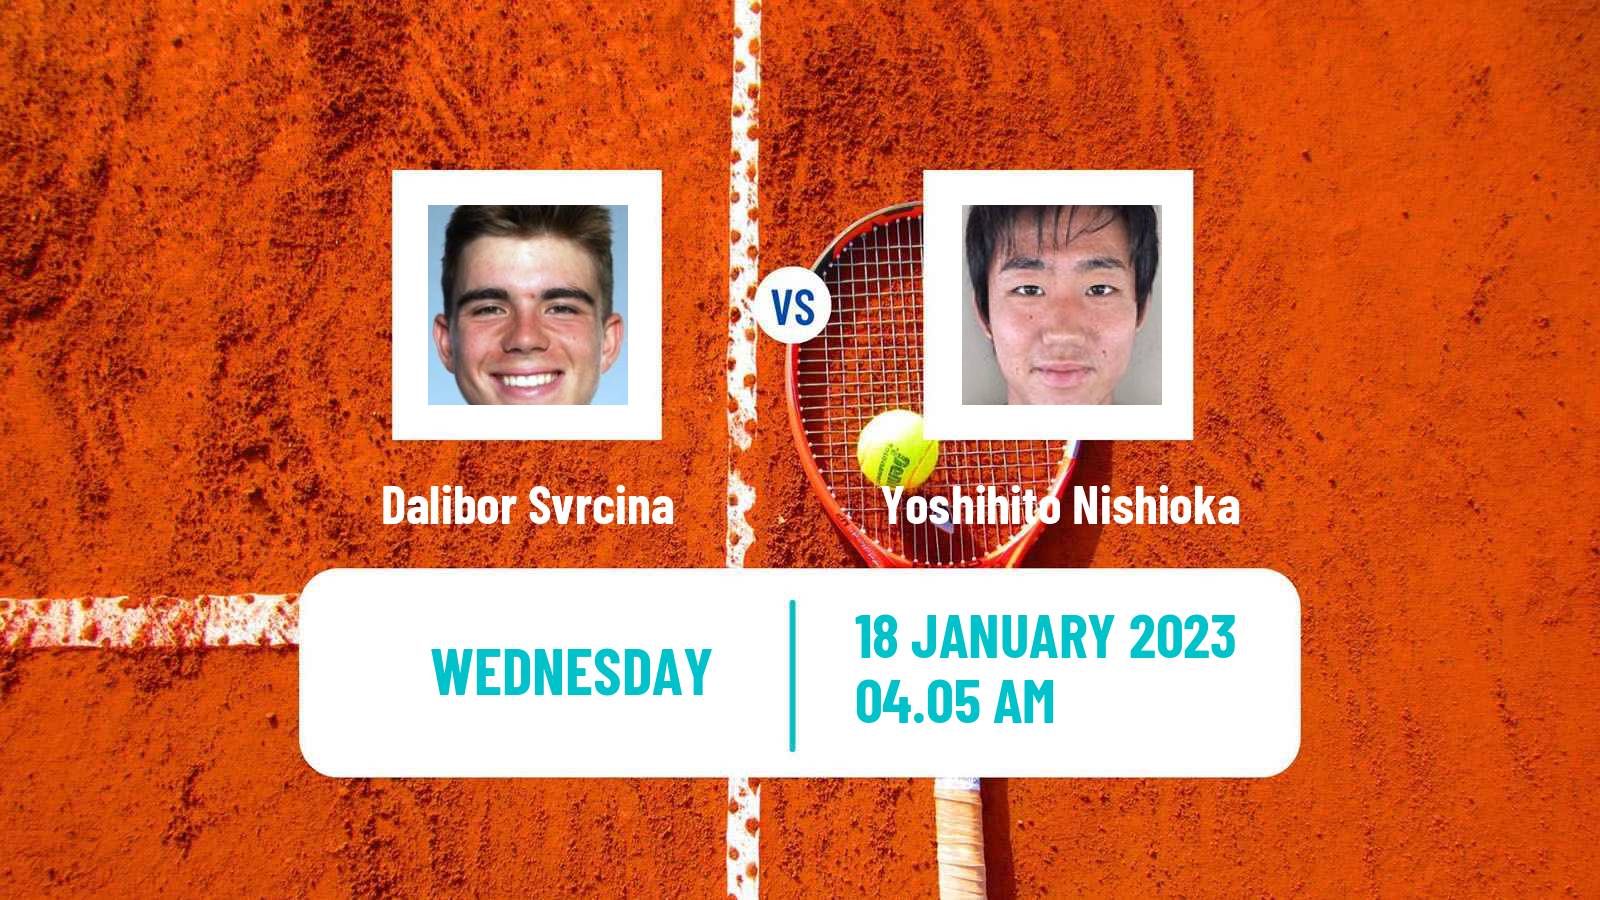 Tennis ATP Australian Open Dalibor Svrcina - Yoshihito Nishioka